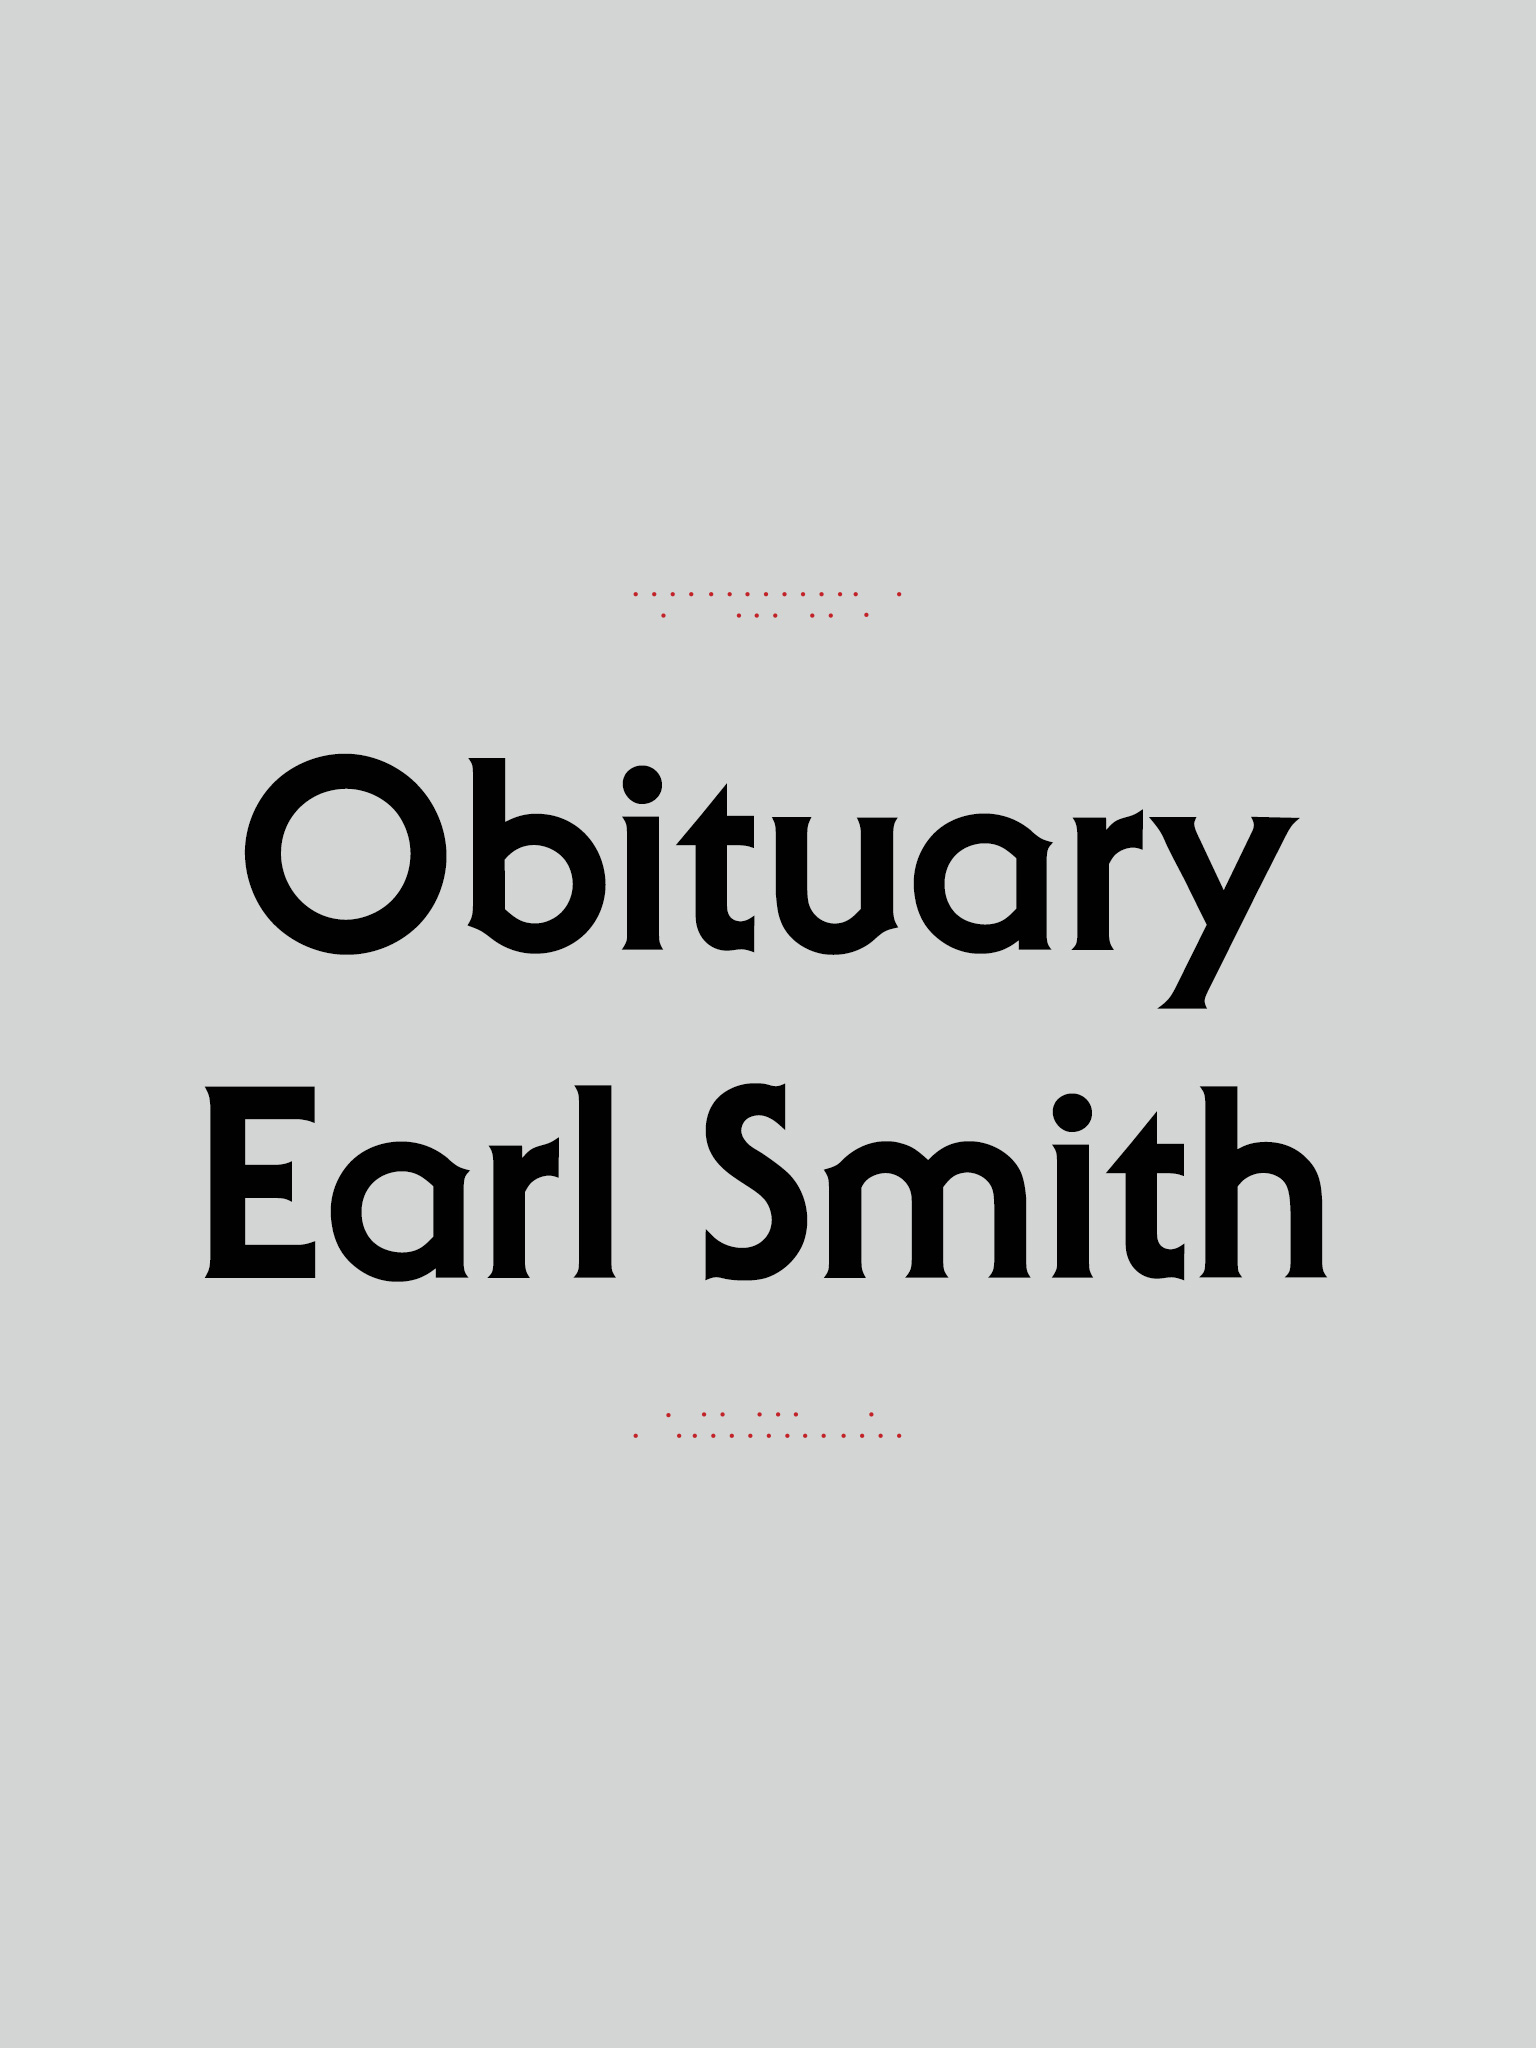 Obituary: Earl Smith